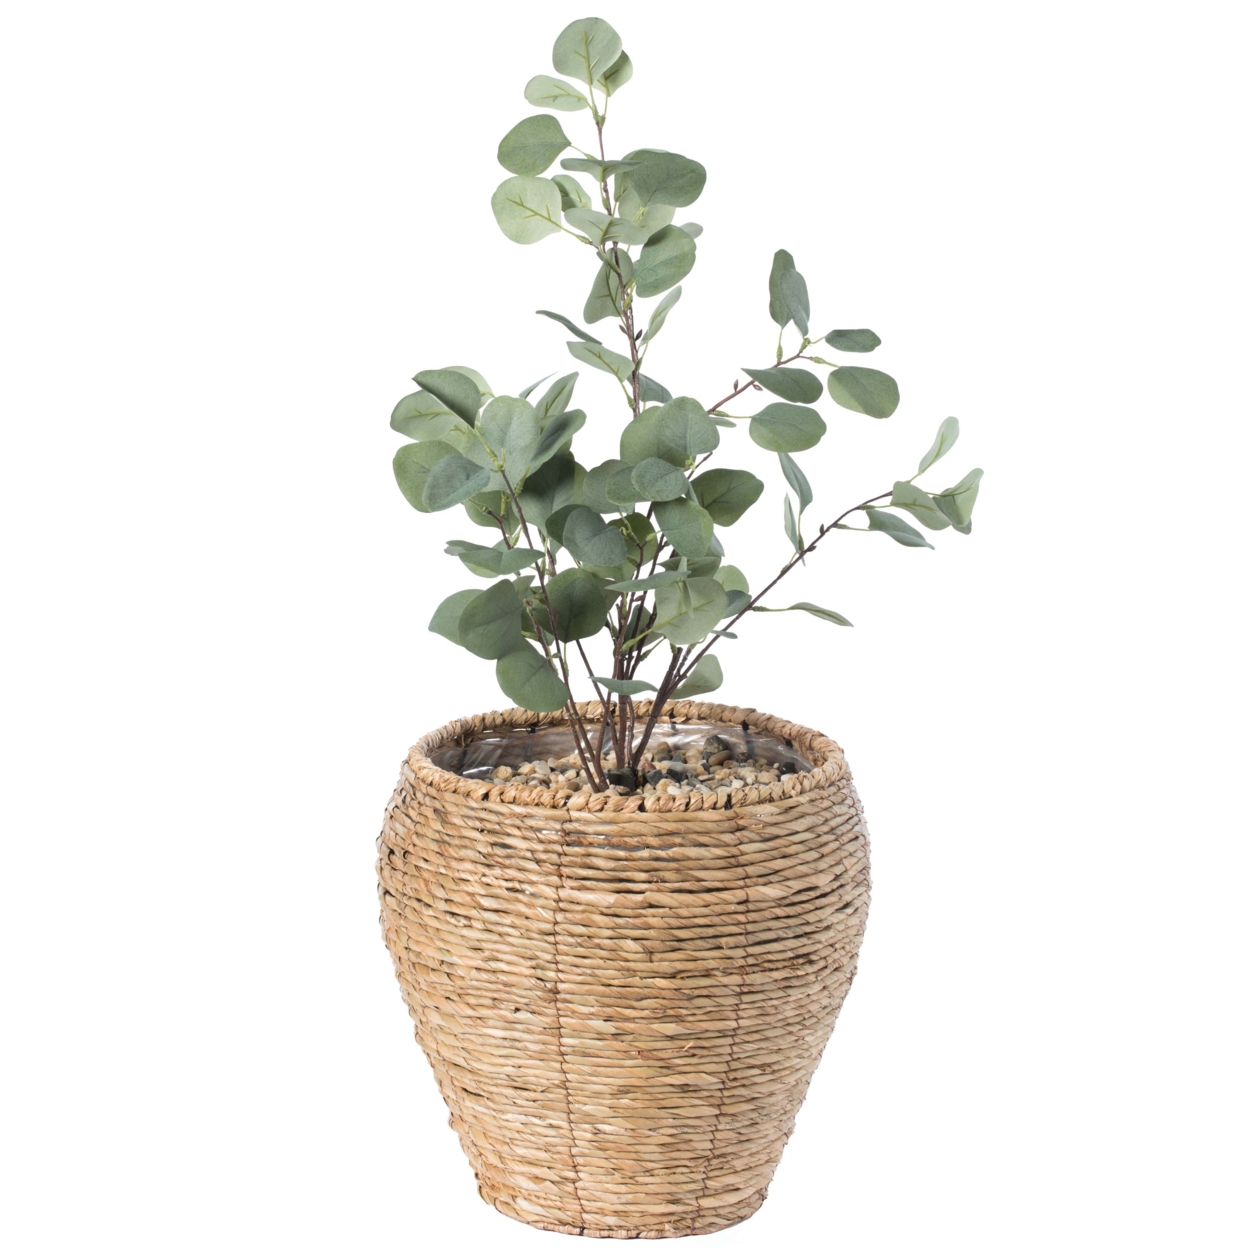 Woven Round Flower Pot Planter Basket With Leak-Proof Plastic Lining - Medium